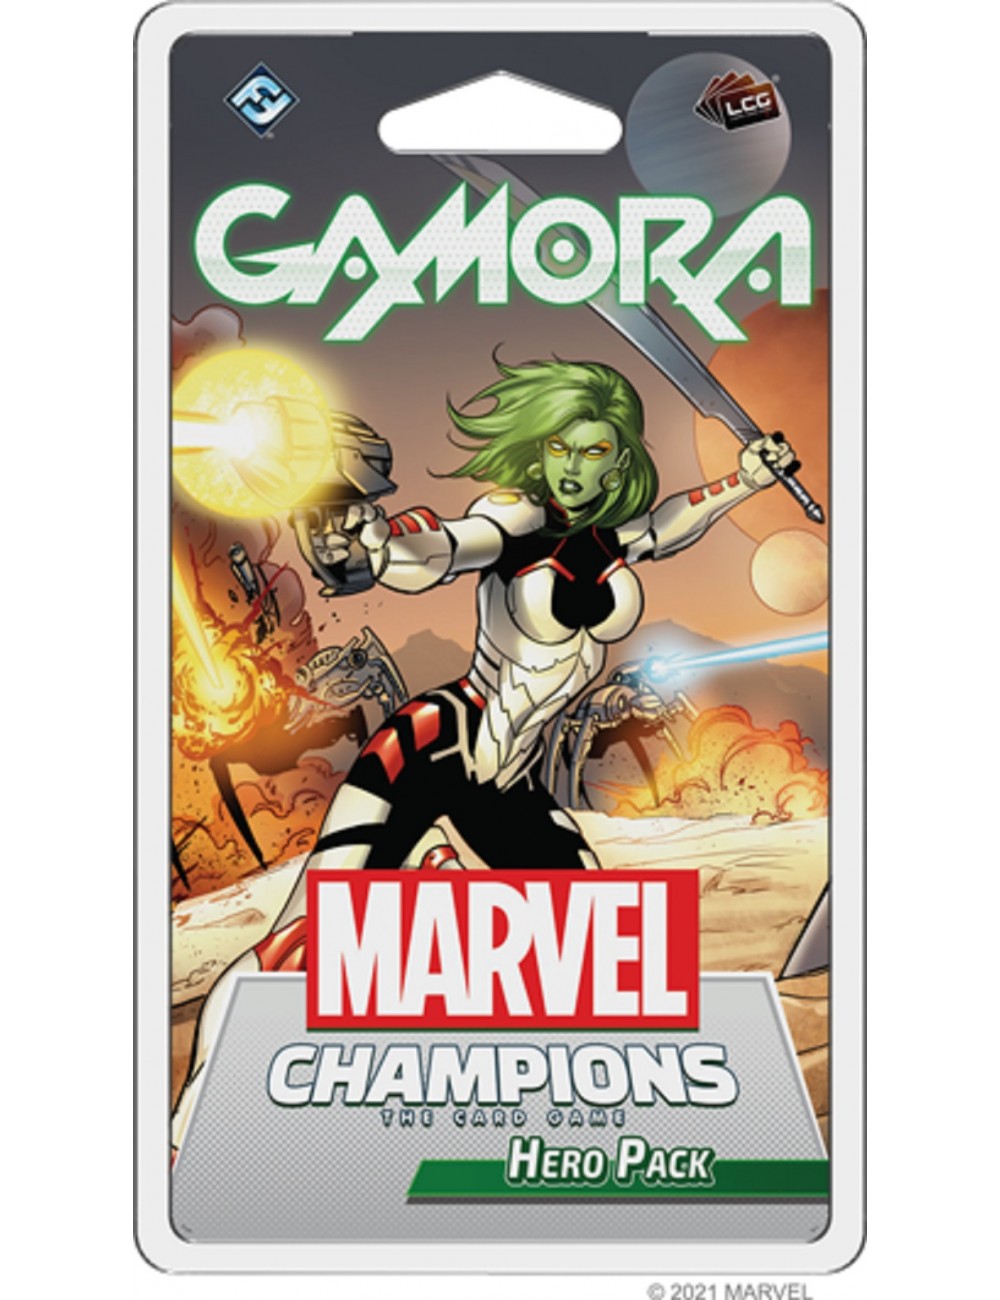 Marvel Champions LCG: Gamora EDFOOMC18ES60 SD Games SD Games